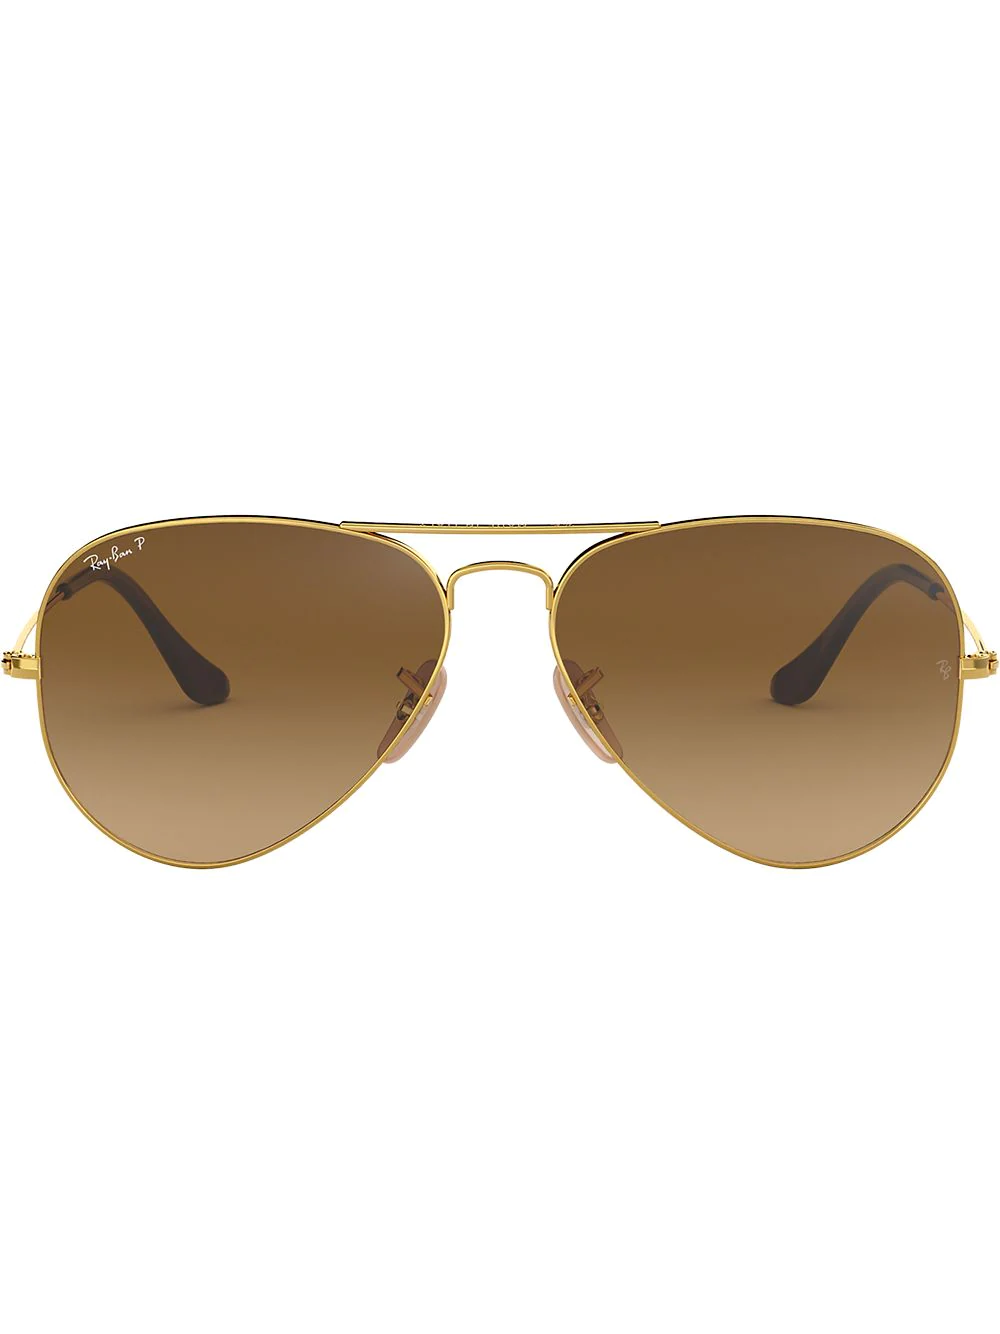 Ray-Ban
Aviator Classic sunglasses